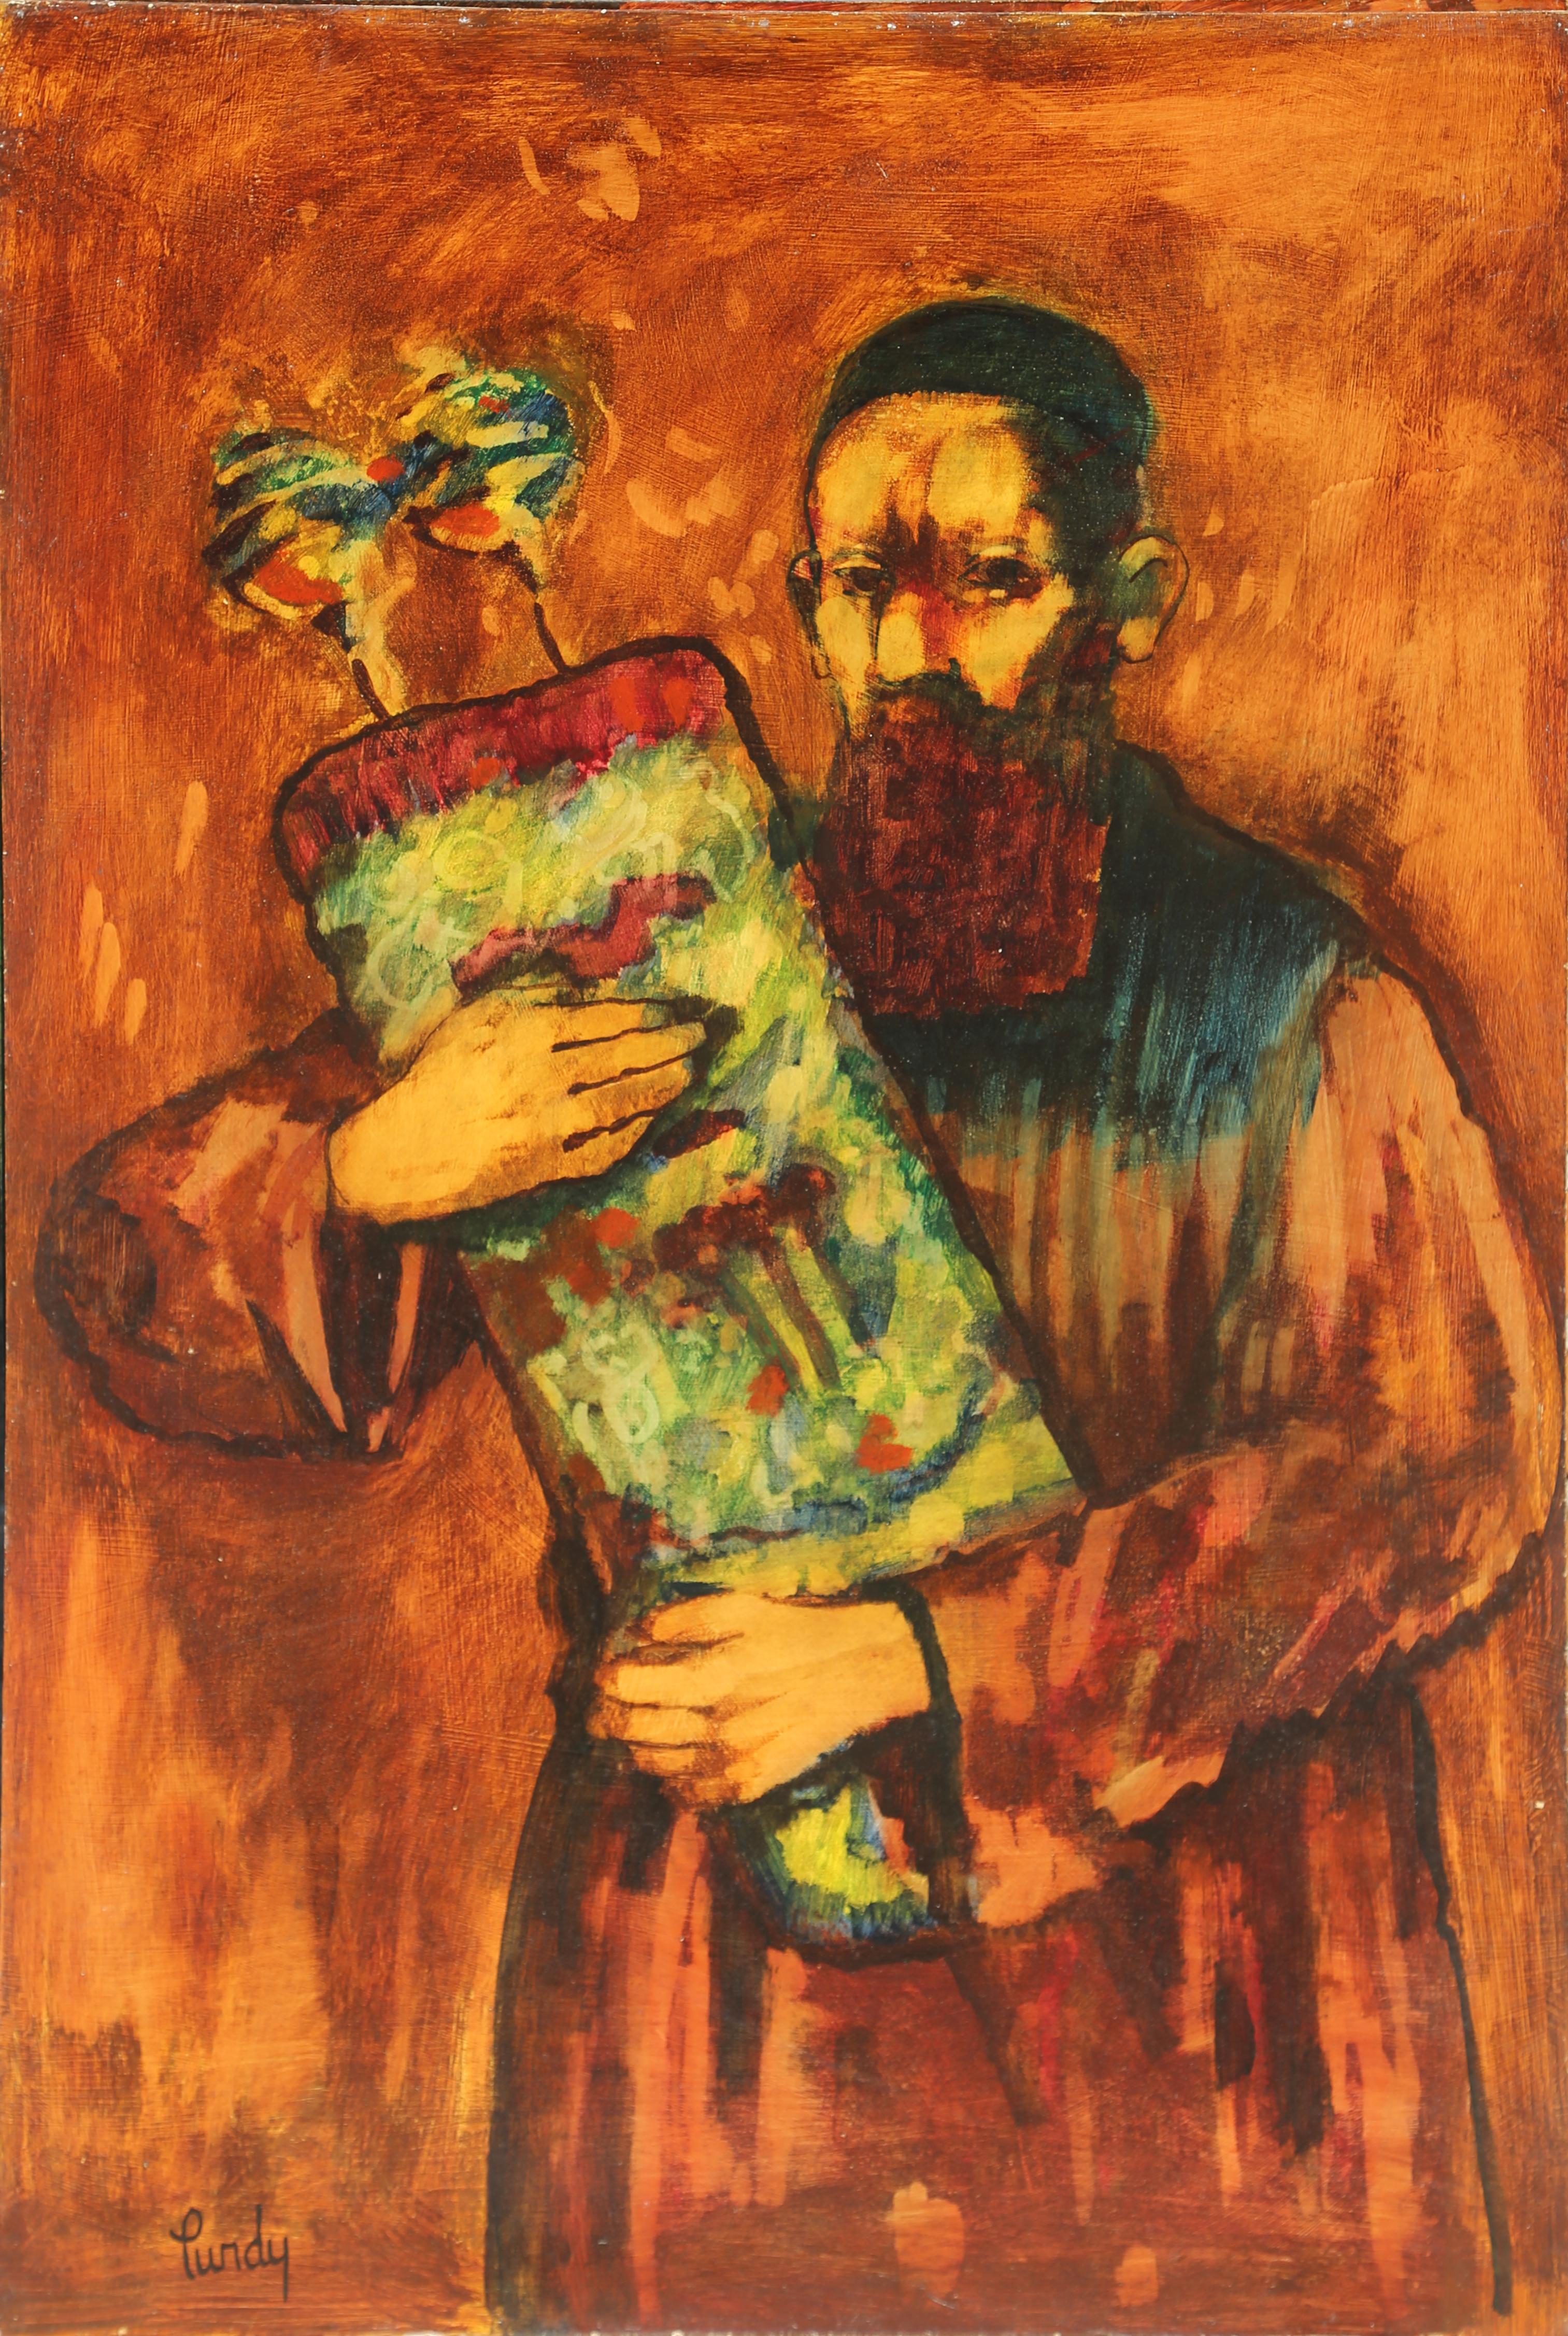 Künstler: Donald Roy Purdy, Amerikaner (1924 - )
Titel: Rabbi
Jahr: um 1960
Medium: Öl auf Masonit, signiert v.l.n.r.
Größe: 36 x 24 in. (91,44 x 60,96 cm)